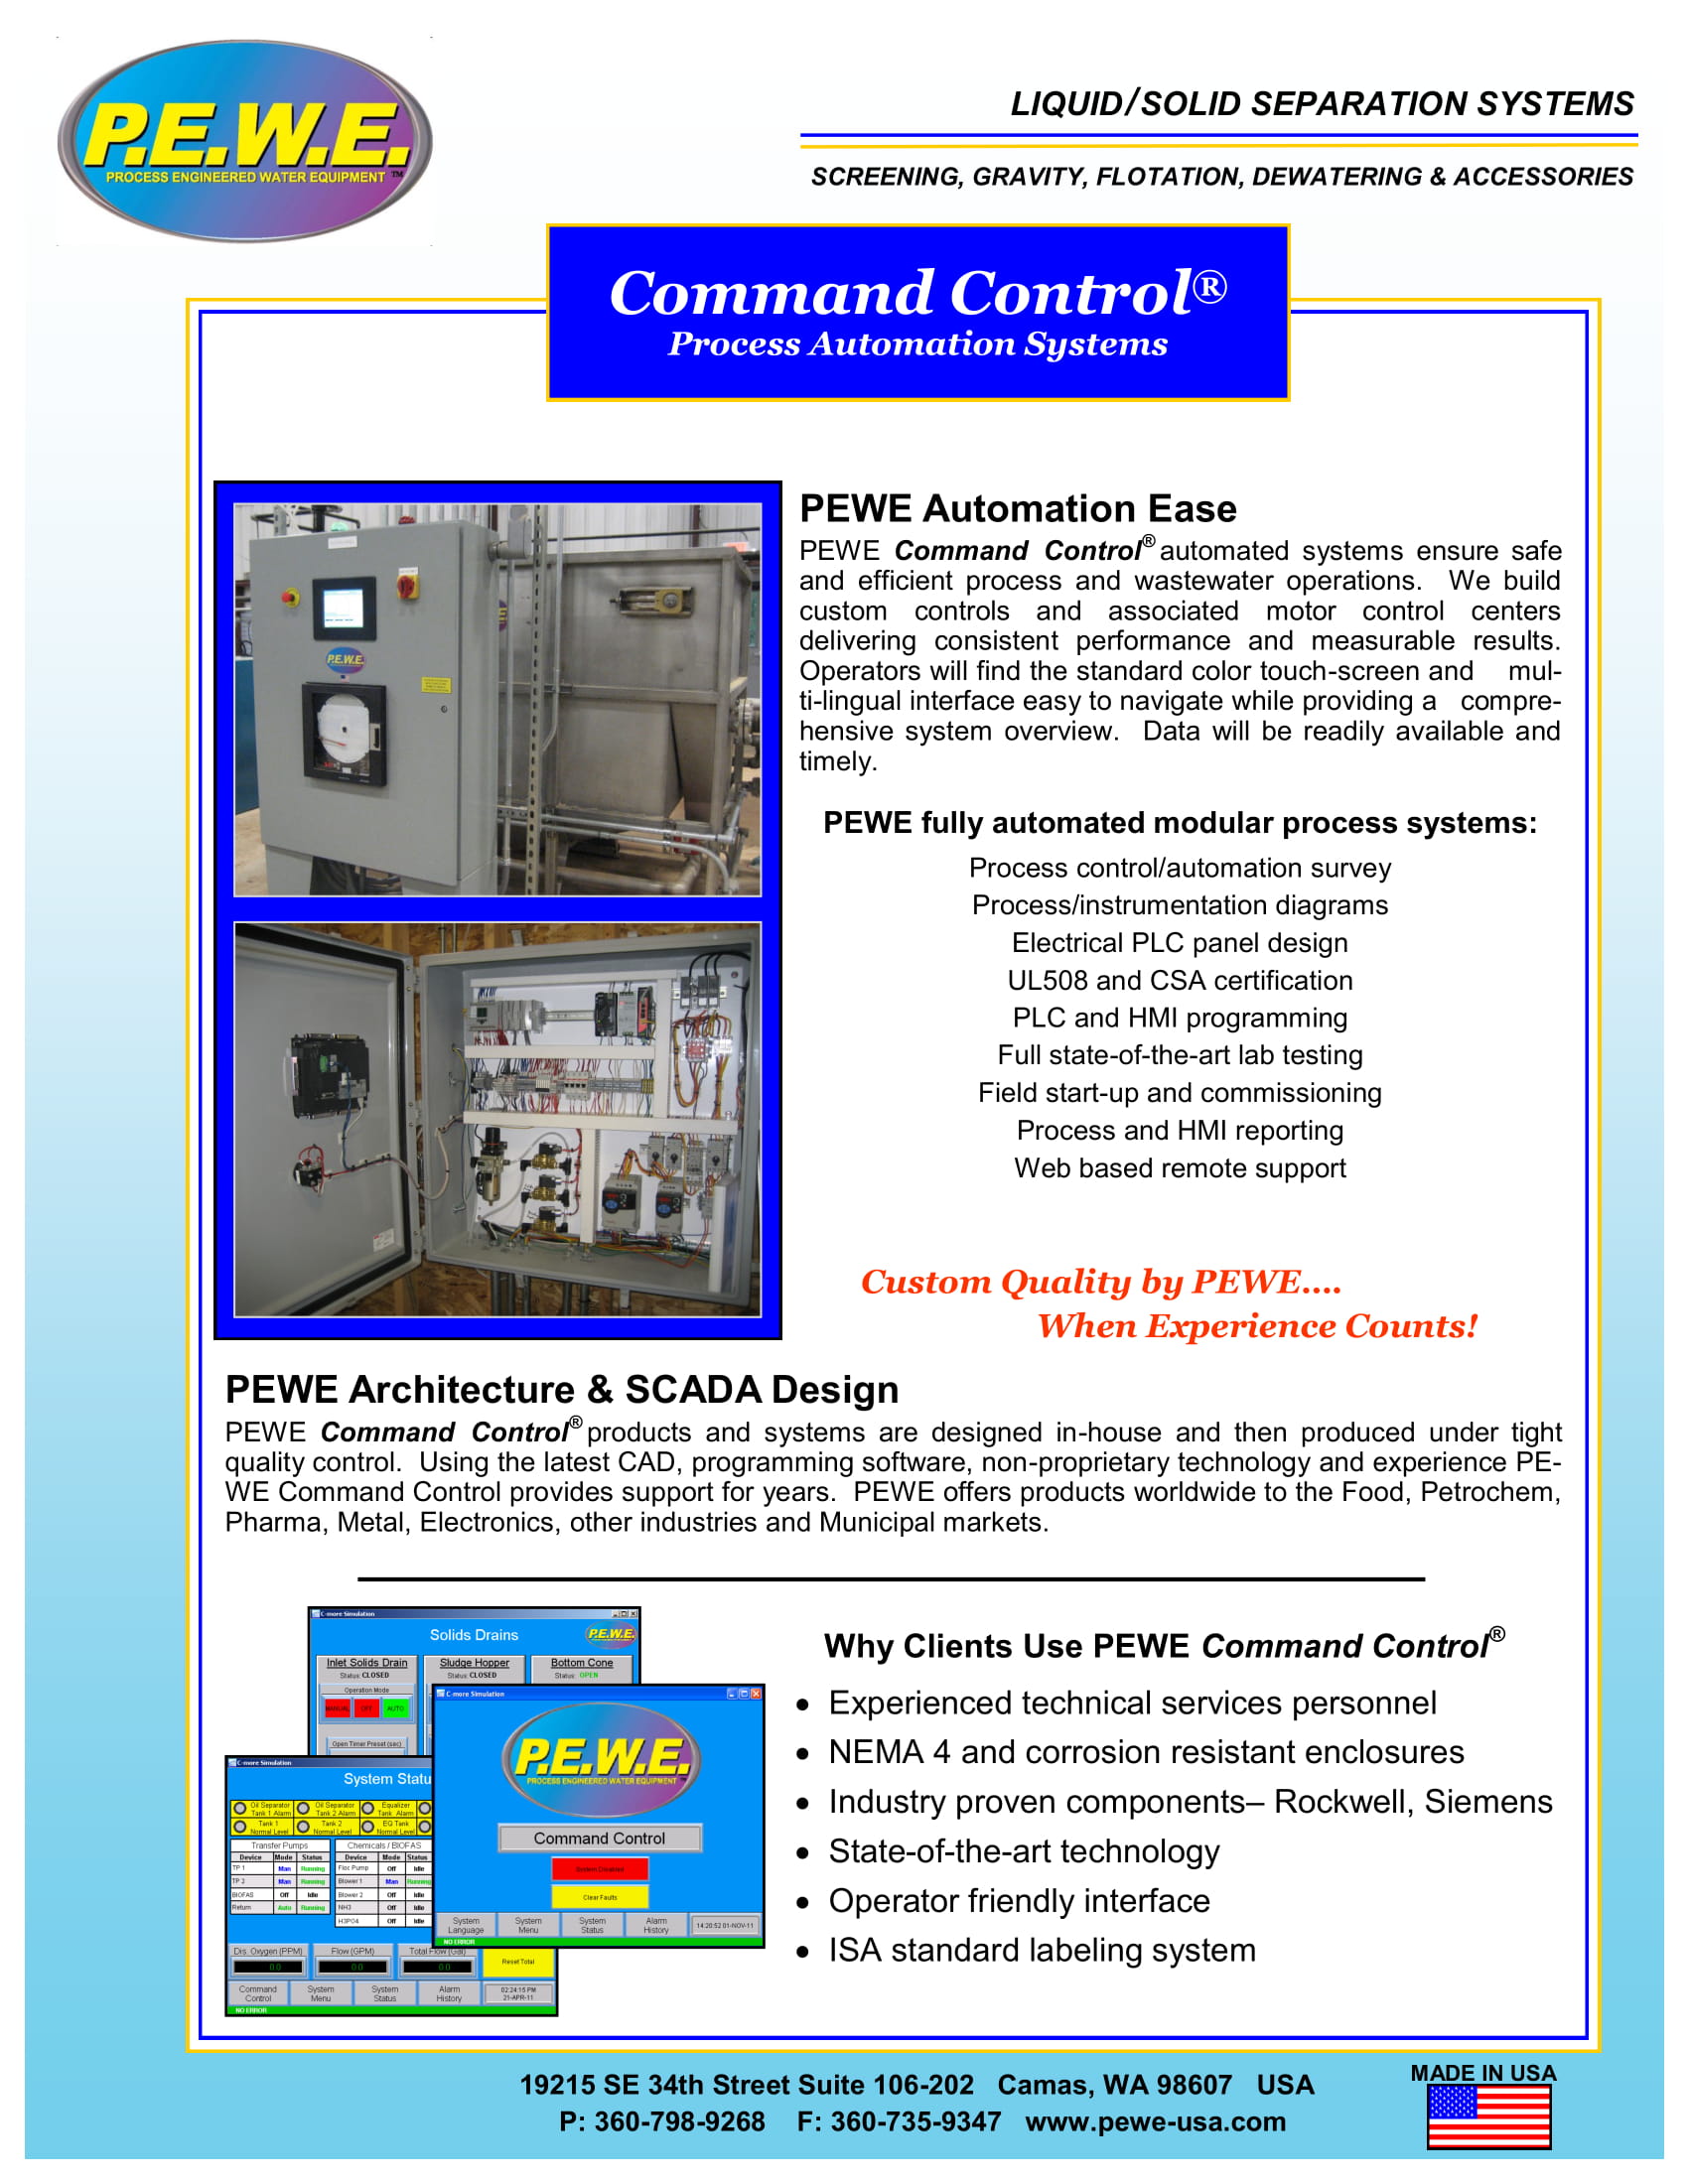 PEWE-Command-Control-Brochure-051719-1.jpg